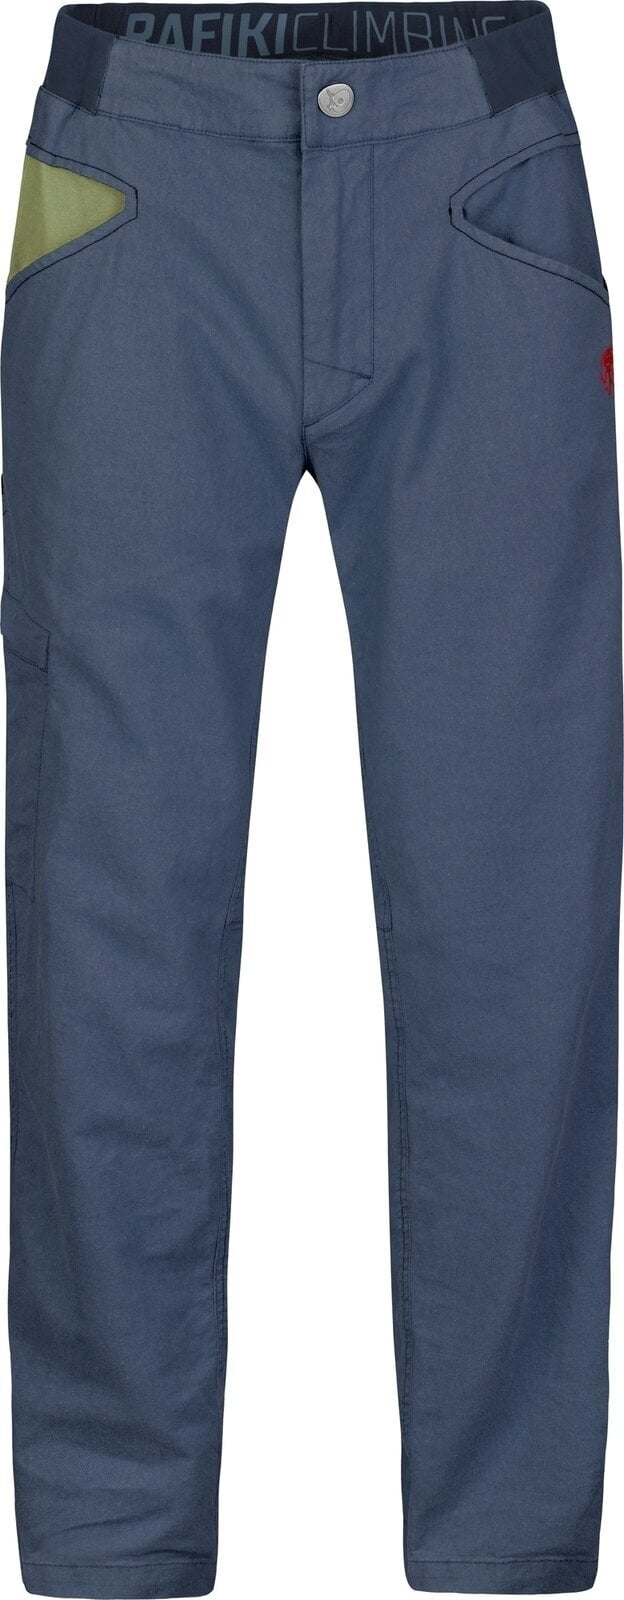 Outdoor Pants Rafiki Grip Man Pants India Ink M Outdoor Pants